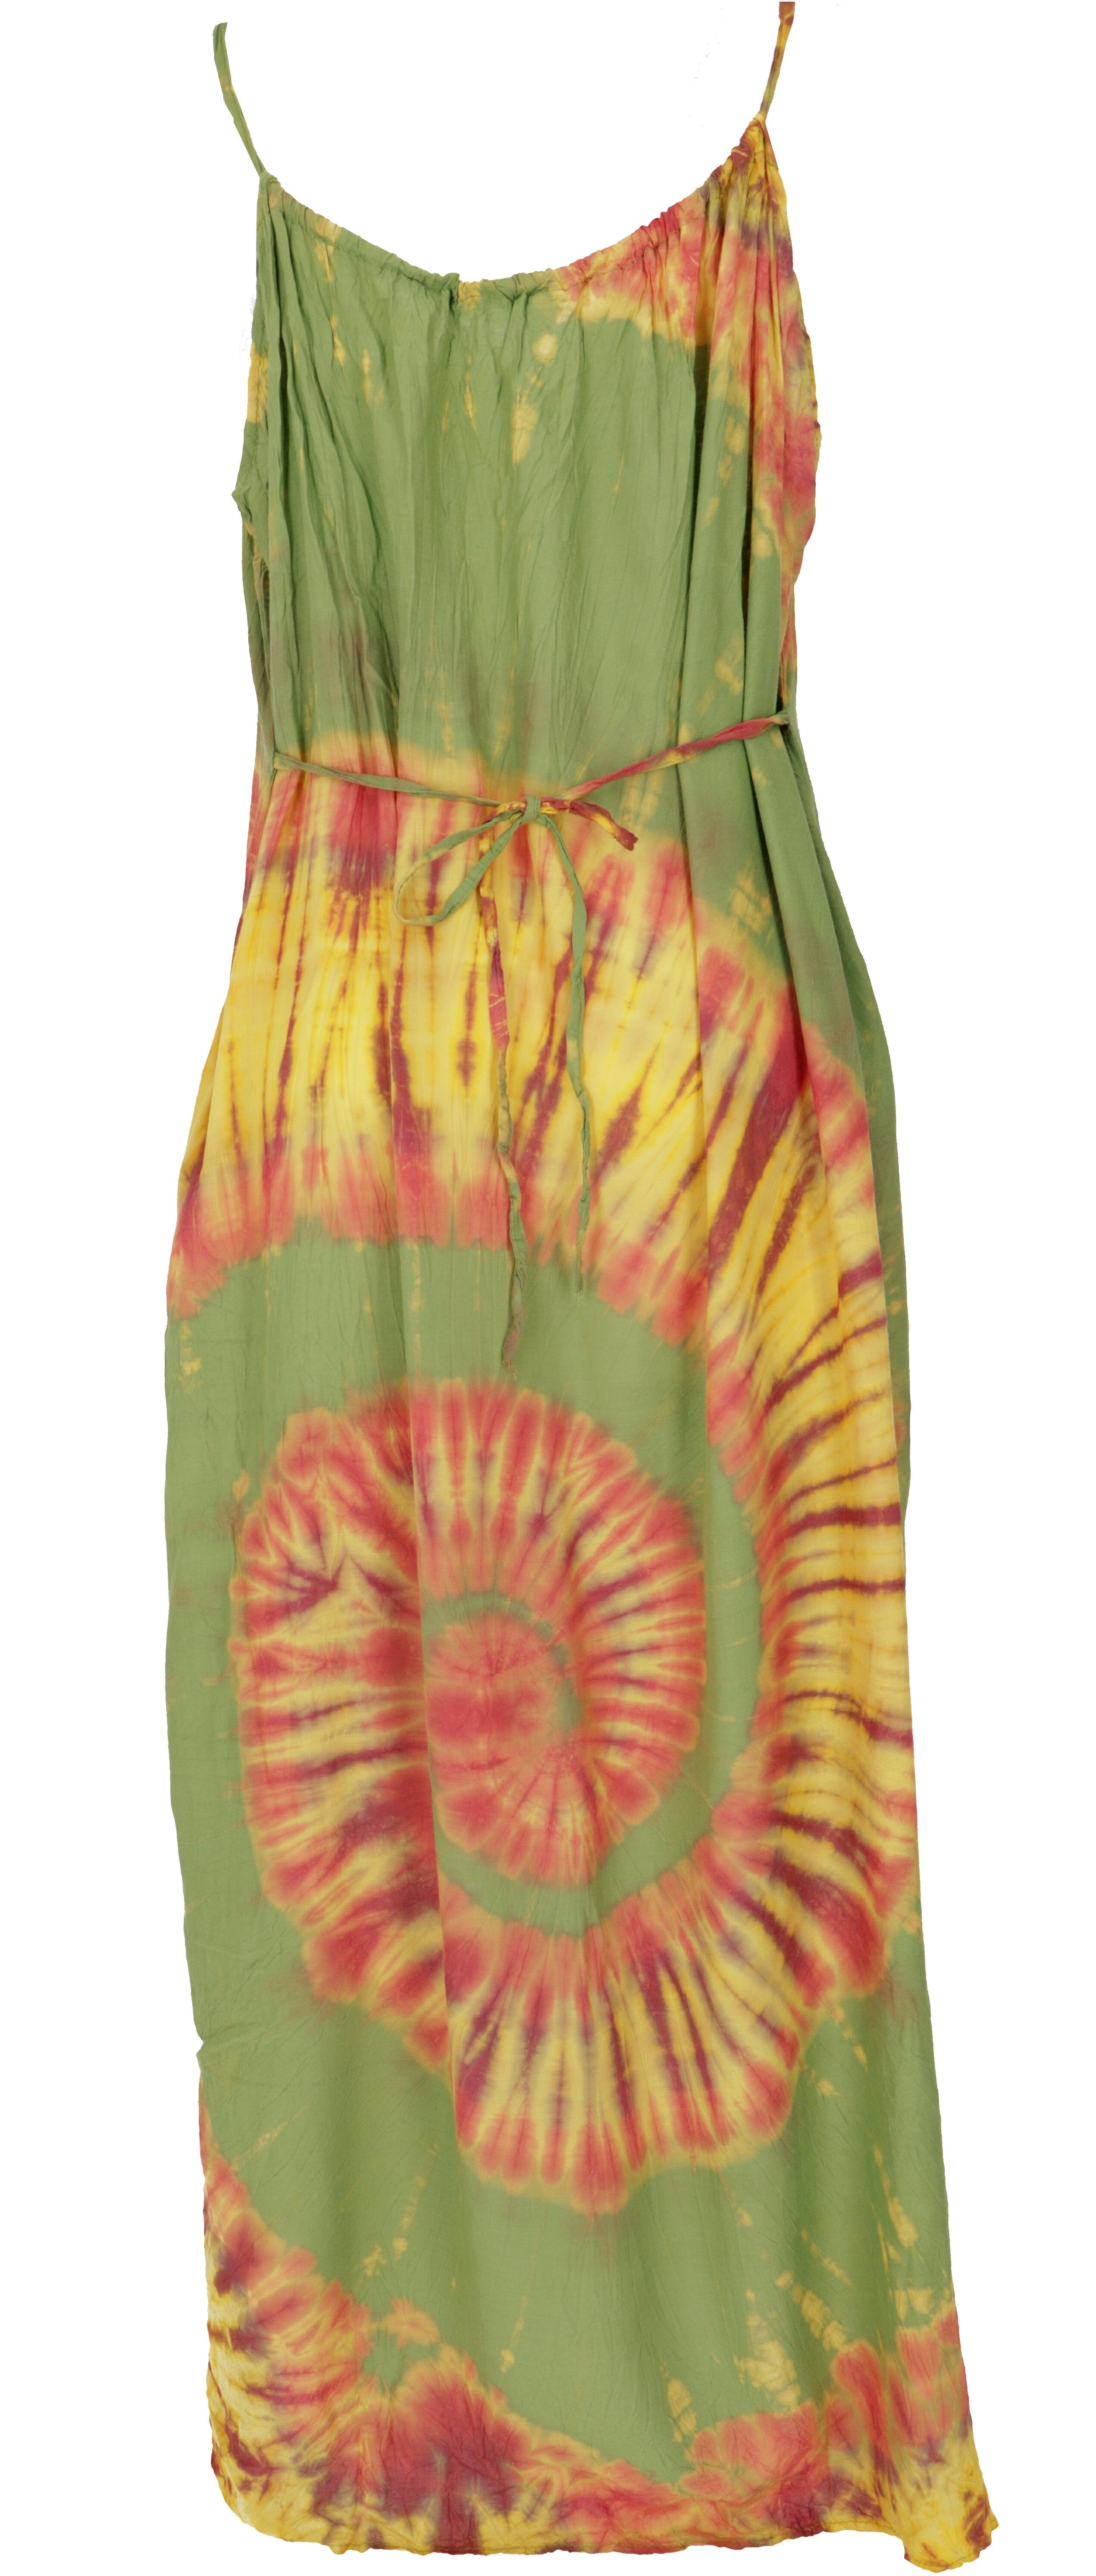 Guru-Shop Midikleid Batik alternative Trägerkleid,.. Bekleidung grün Hippiekleid, Sommerkleid